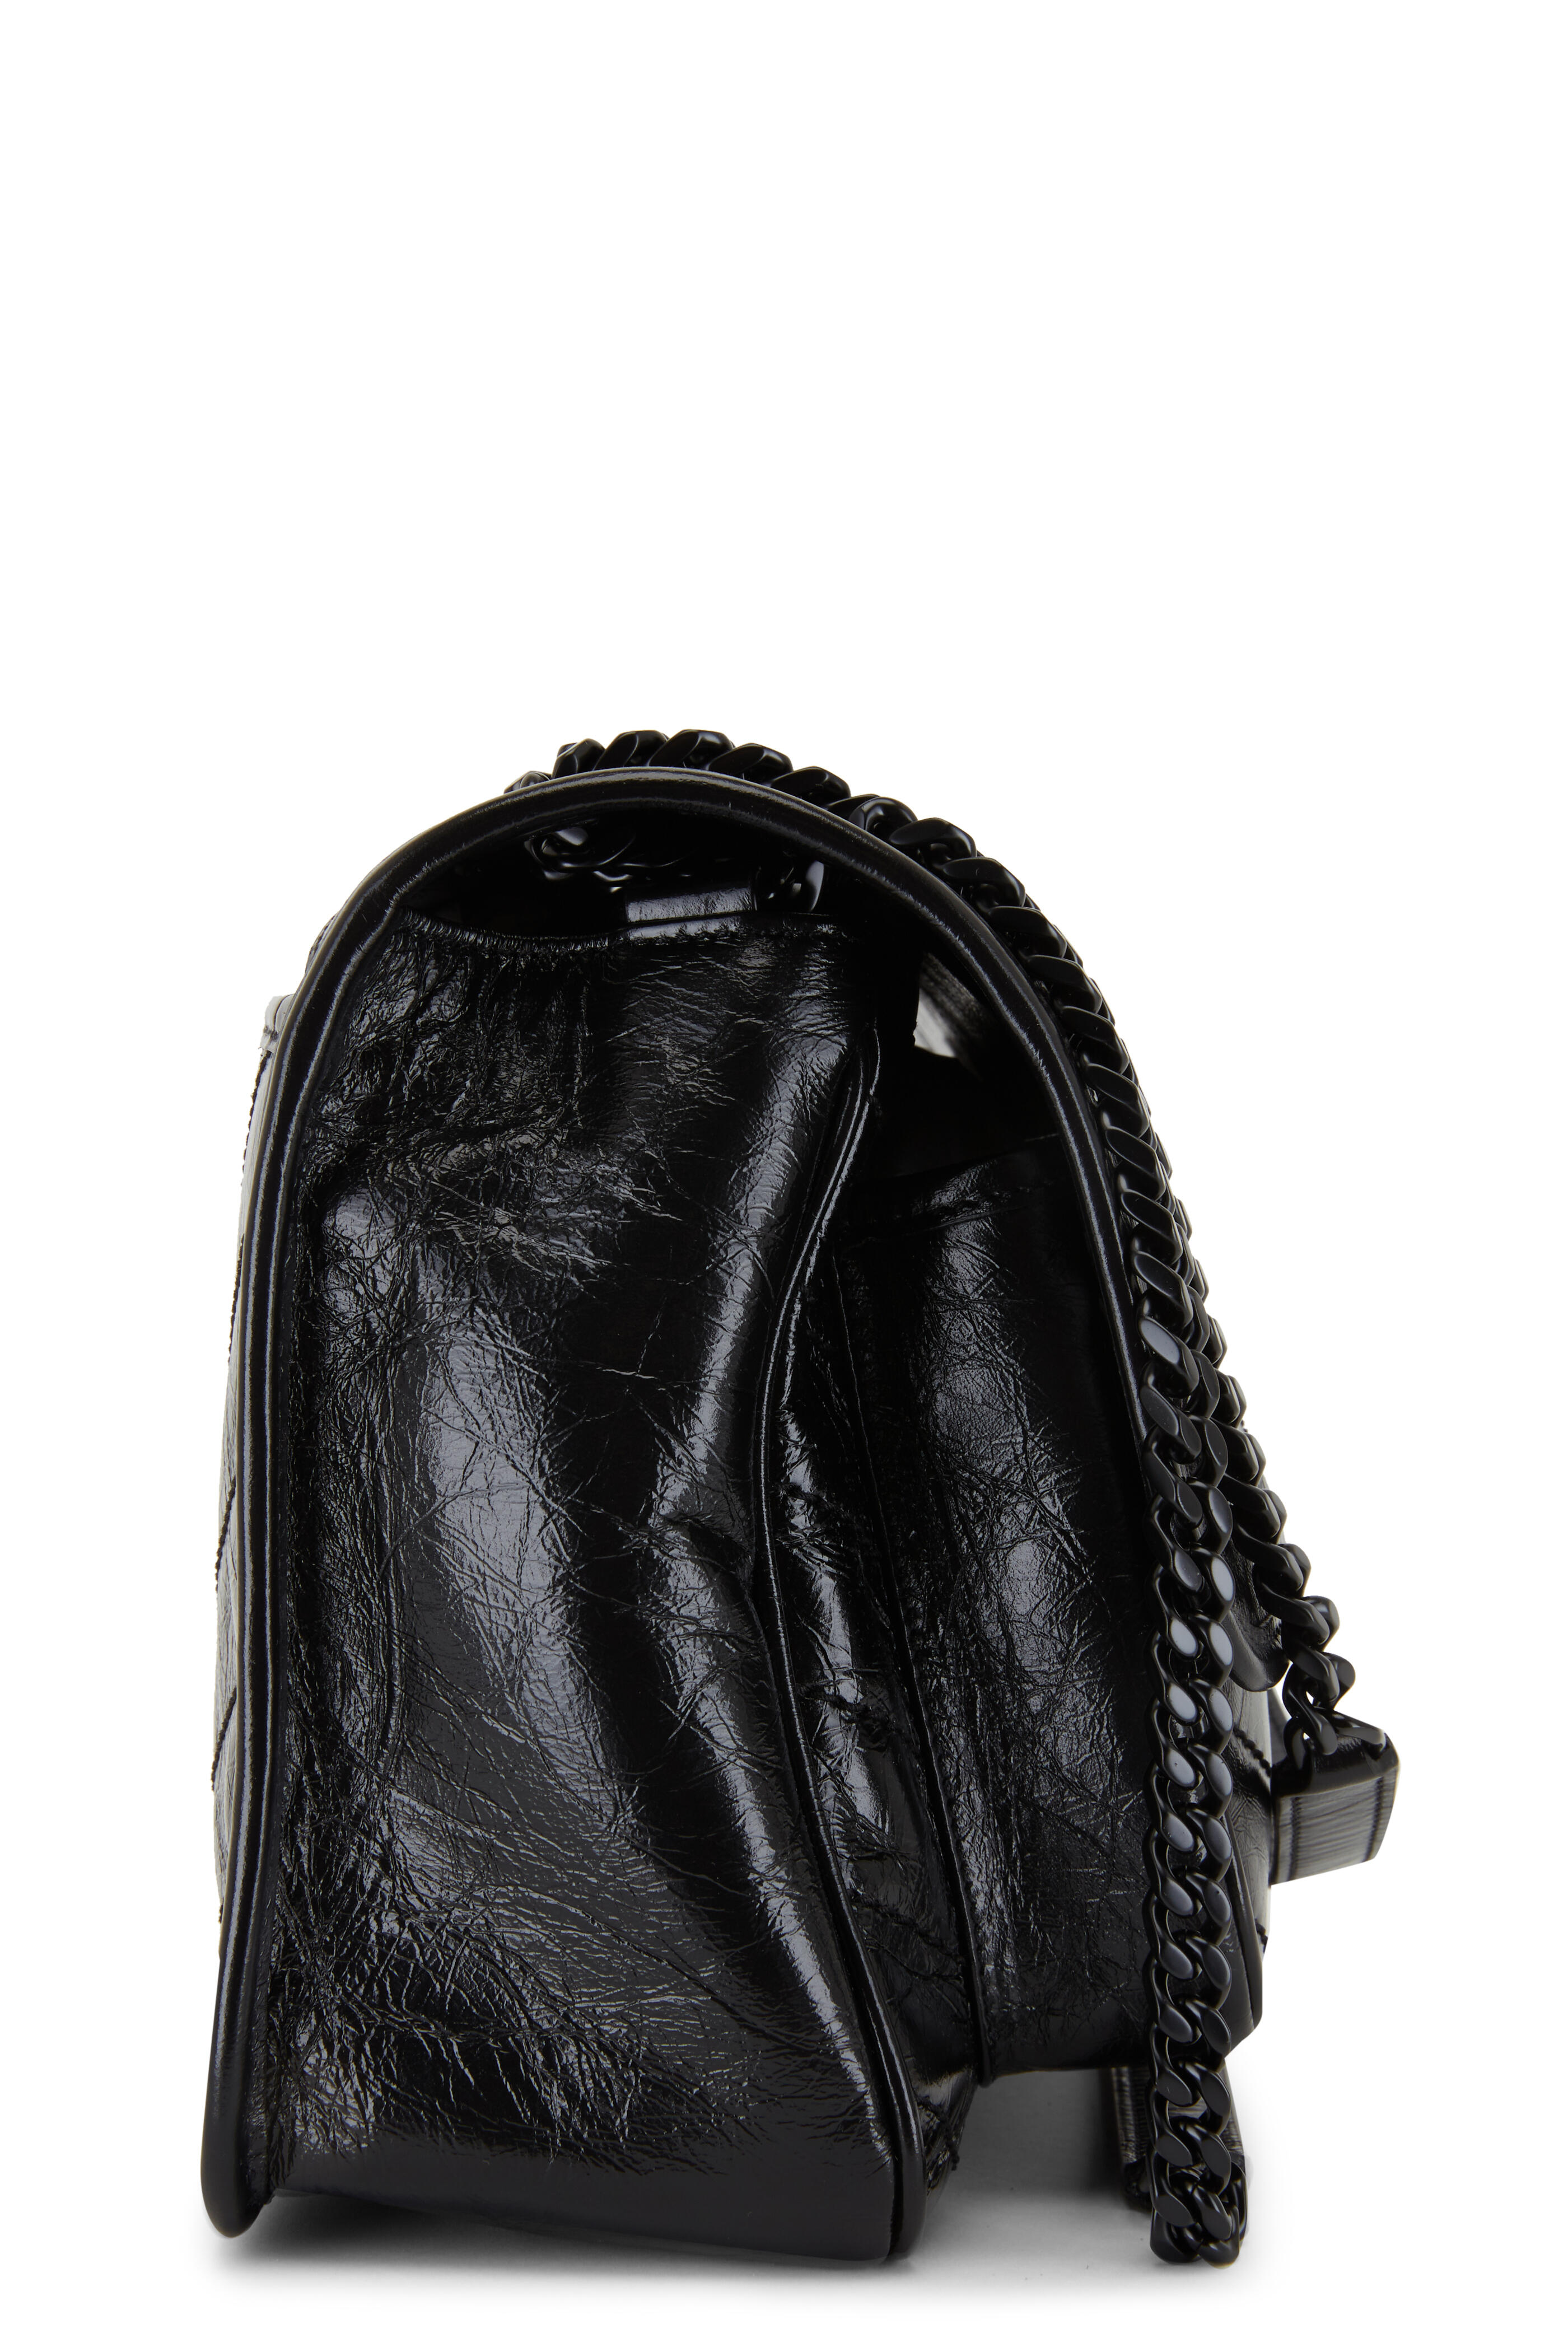 Saint Laurent - Niki Monogram Shiny Black Leather Medium Chain Bag